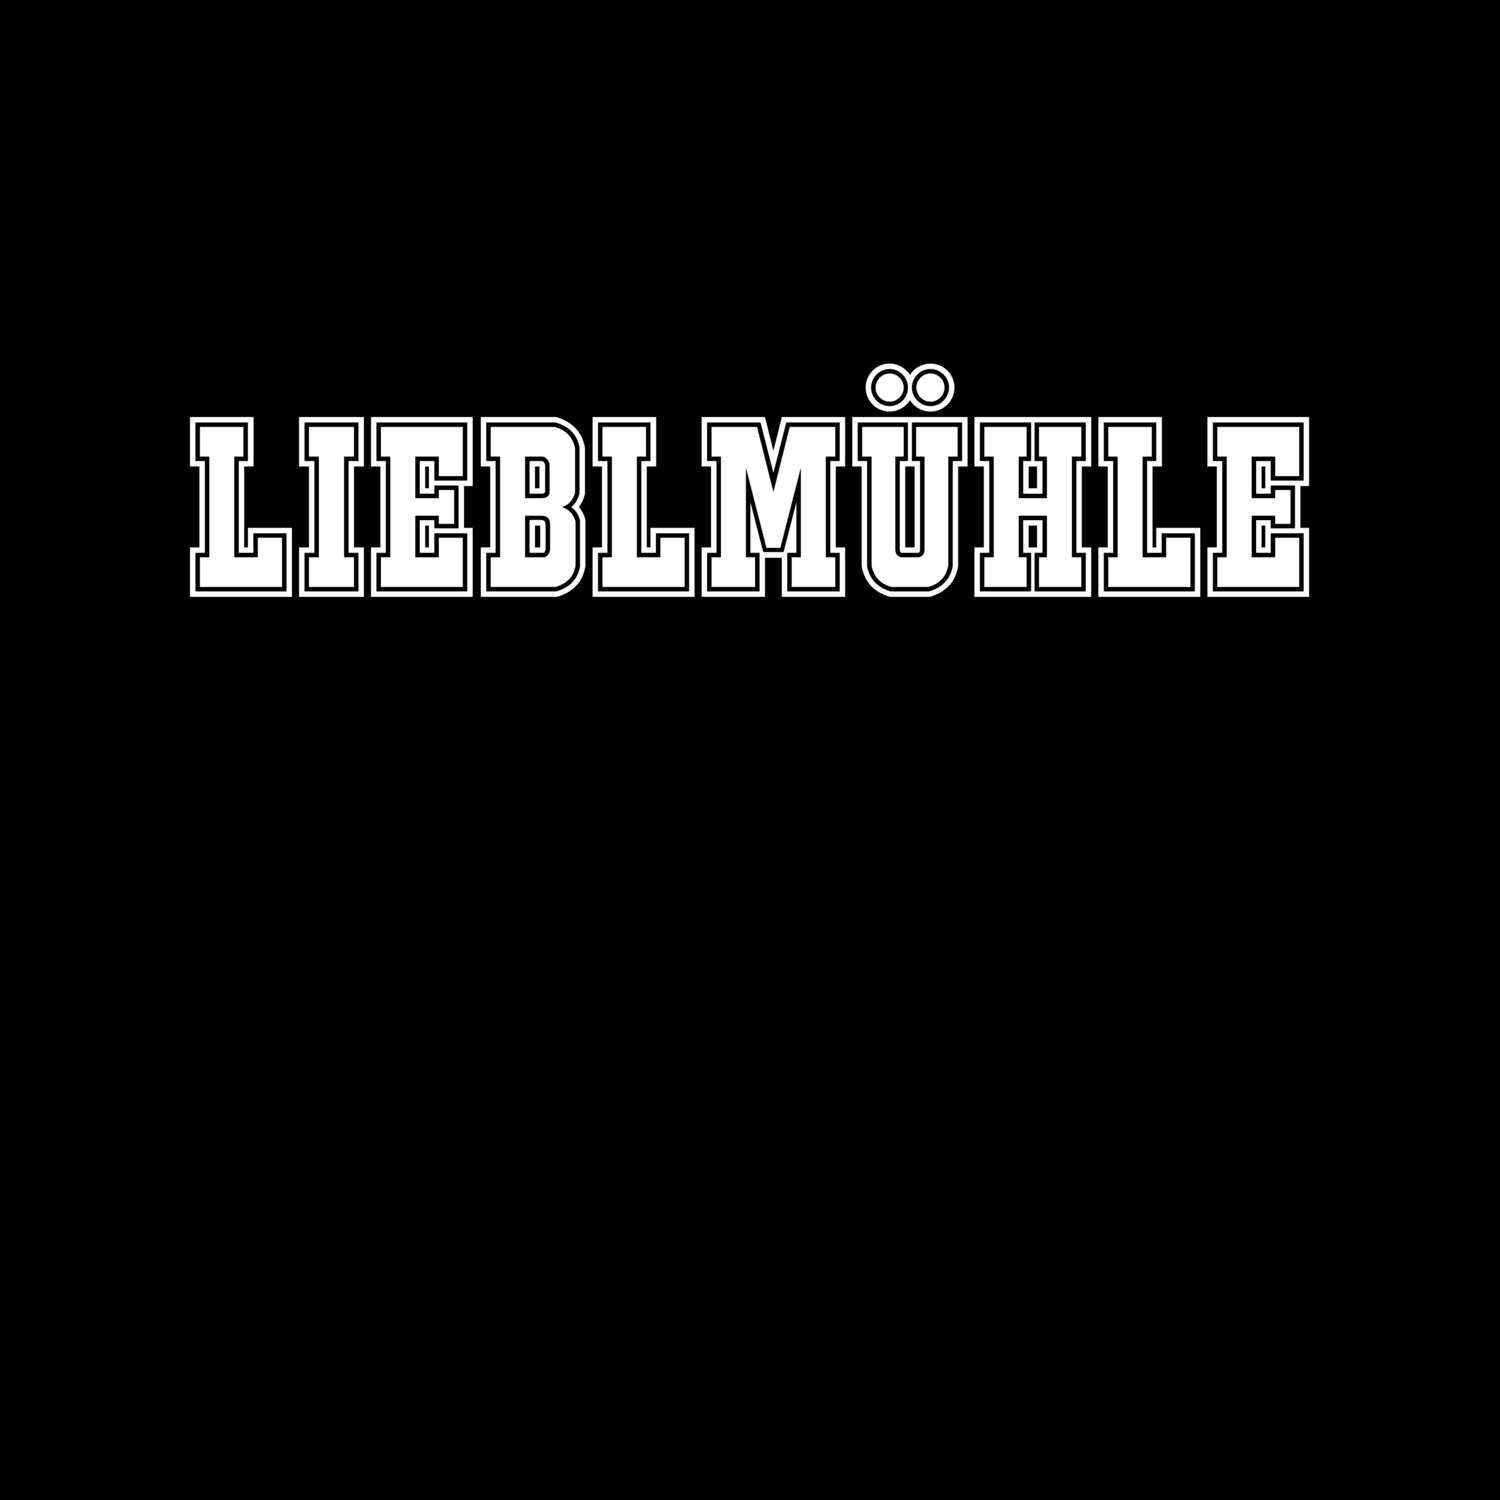 Lieblmühle T-Shirt »Classic«